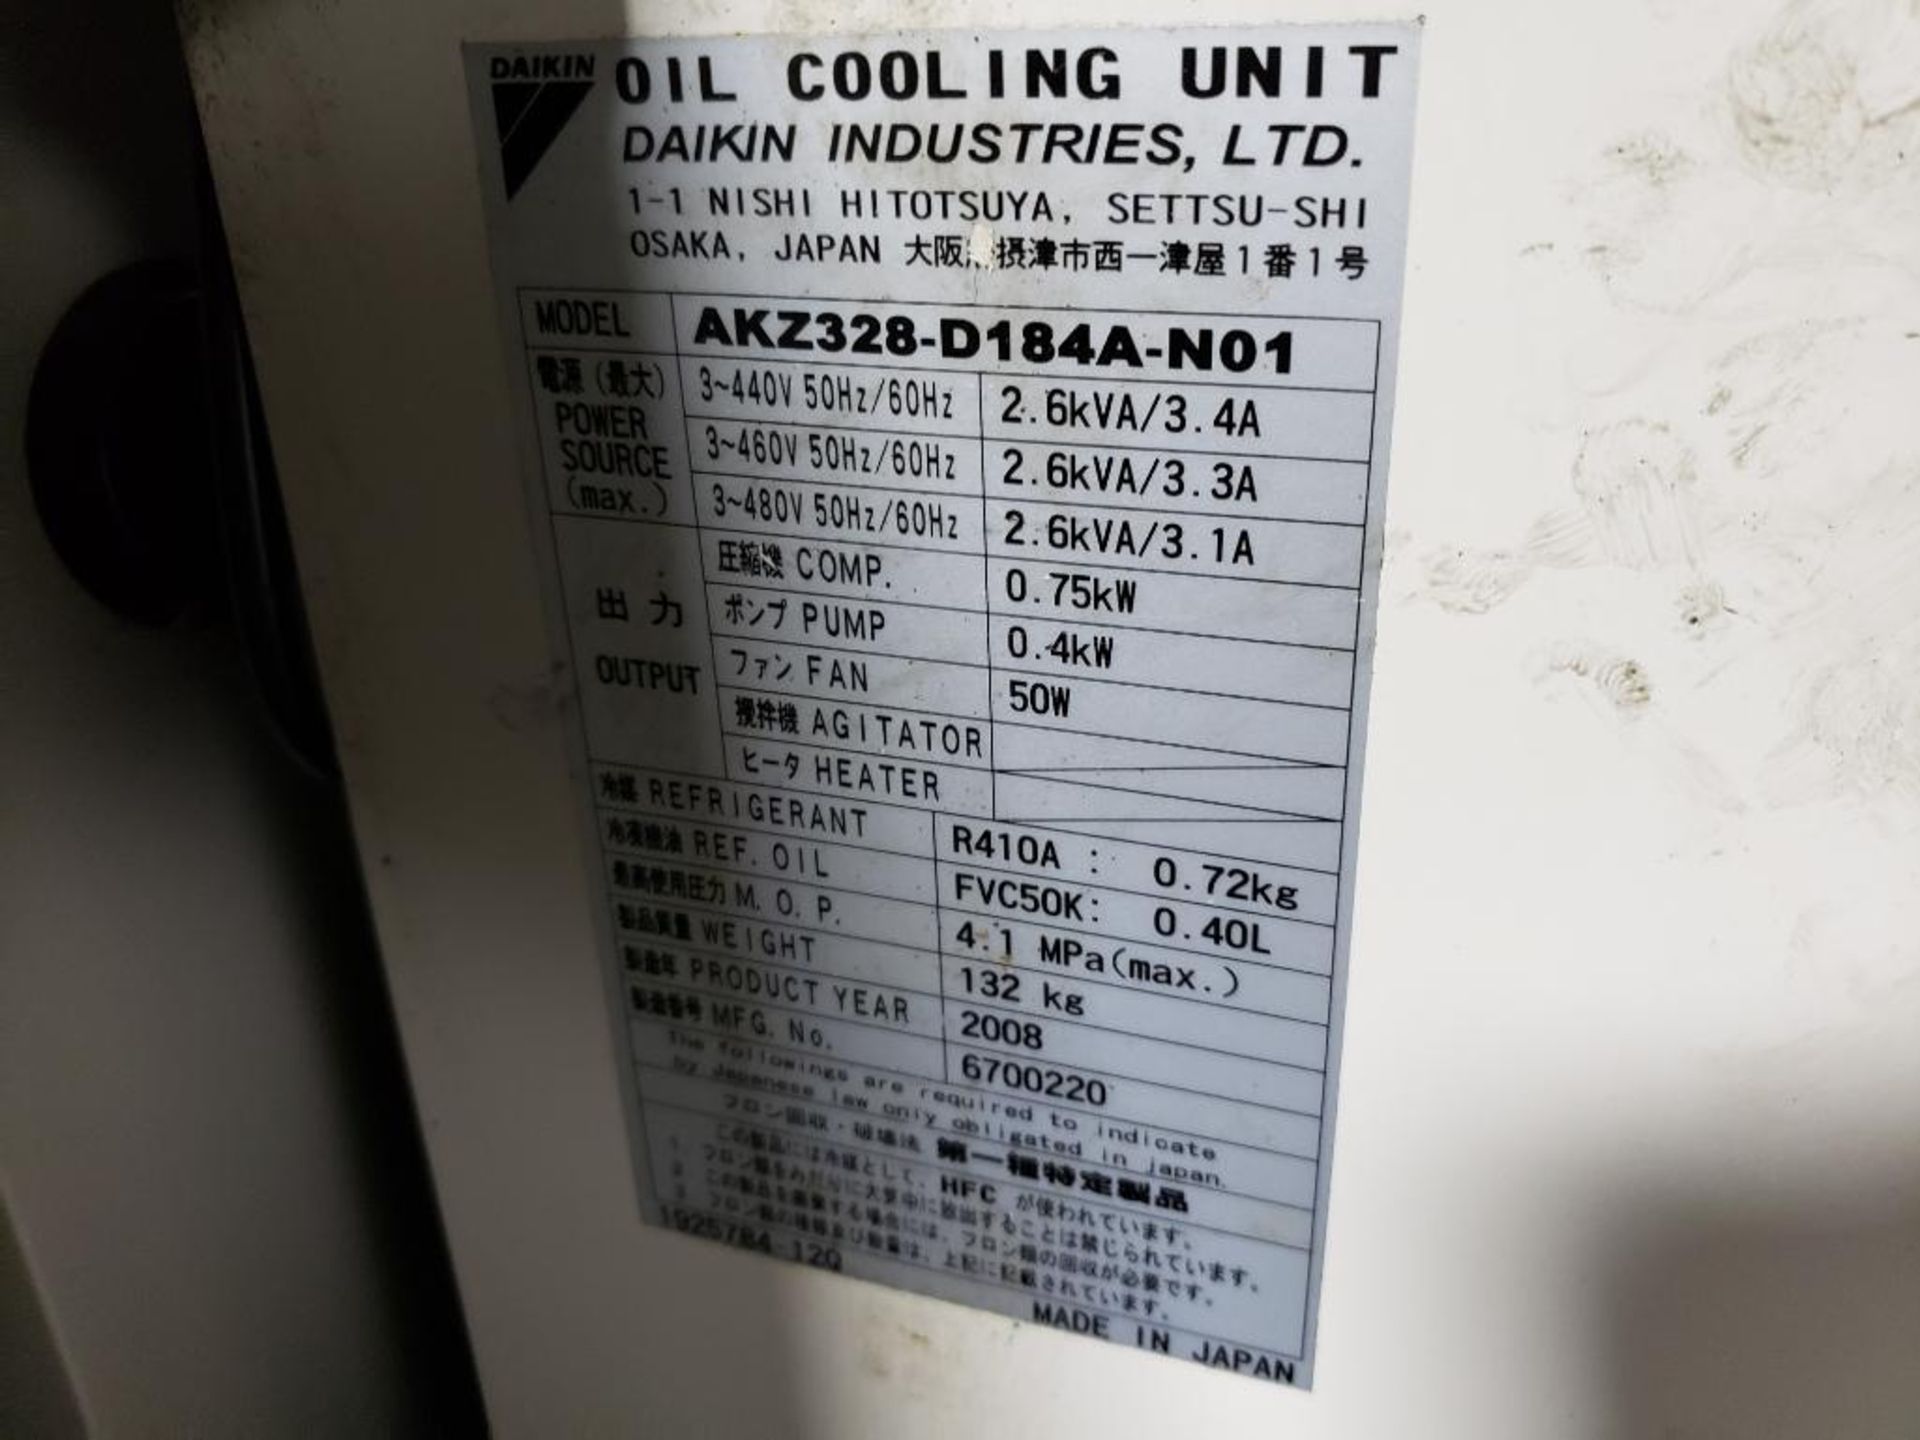 Daikin oil cooling unit. Model AKZ328-D184A-N01. - Image 2 of 2